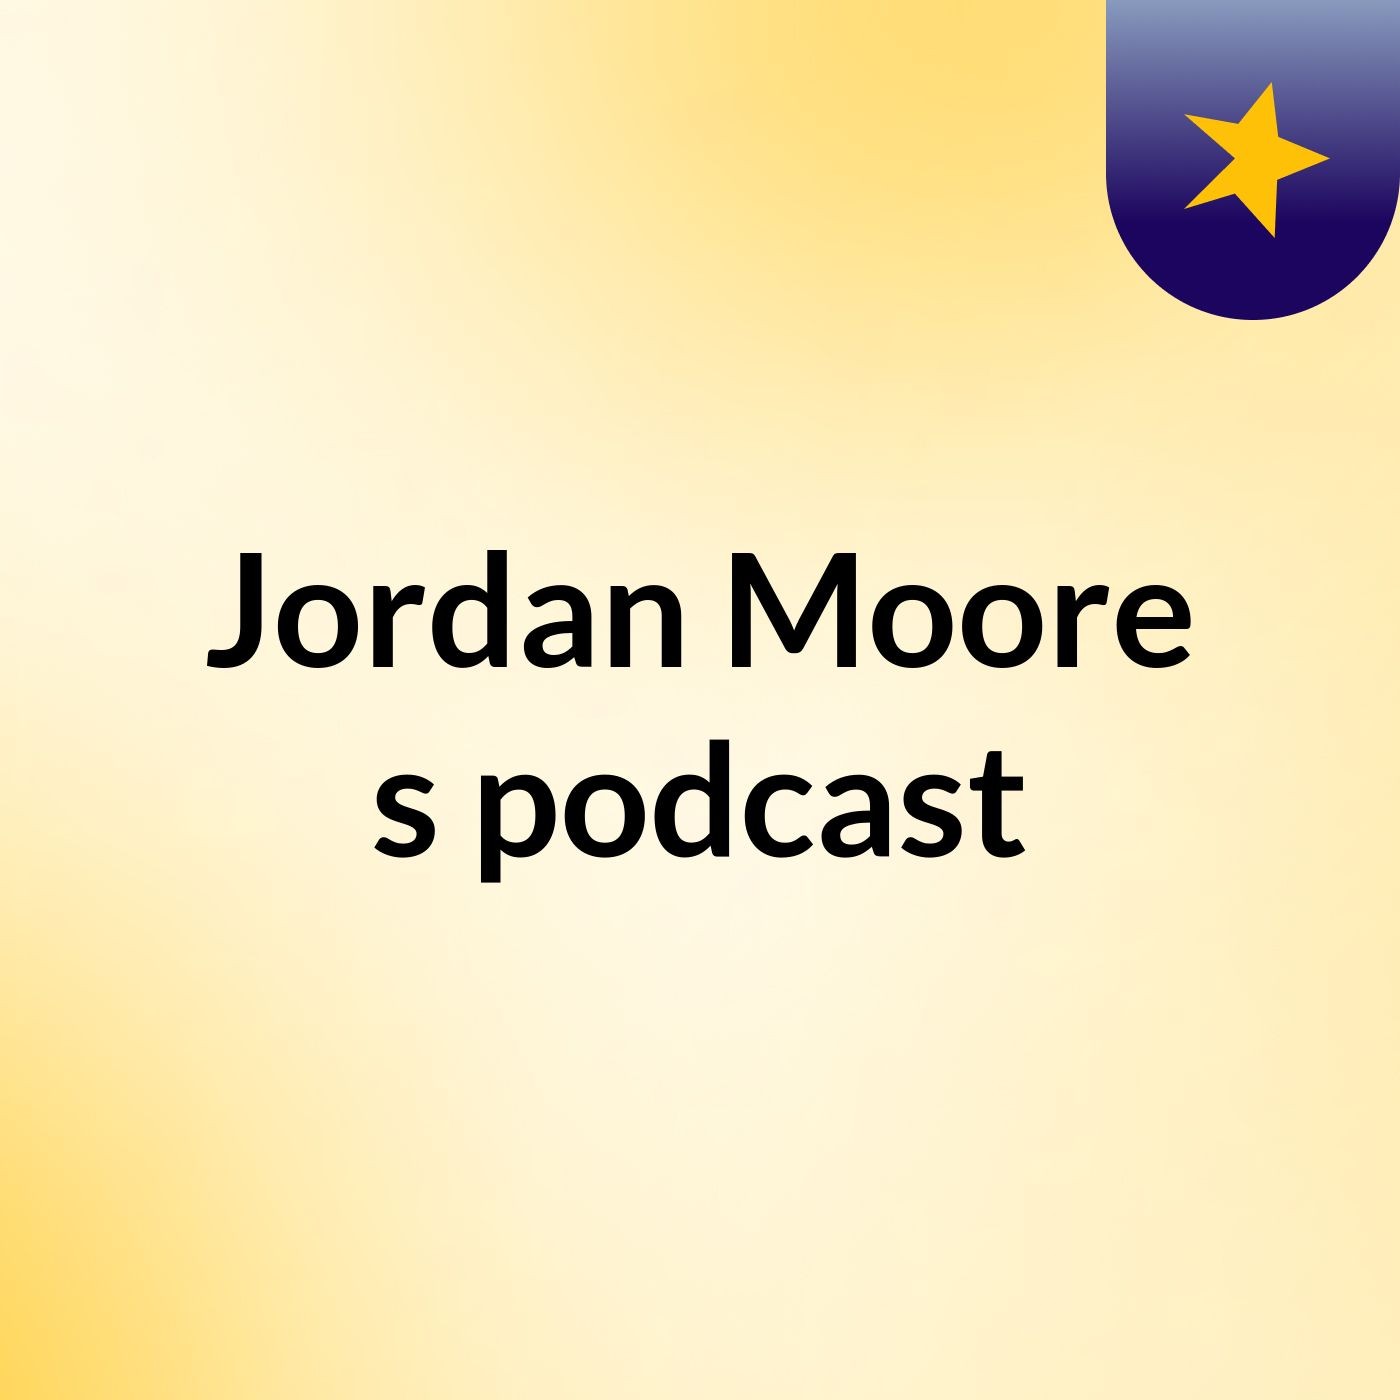 Jordan Moore's podcast